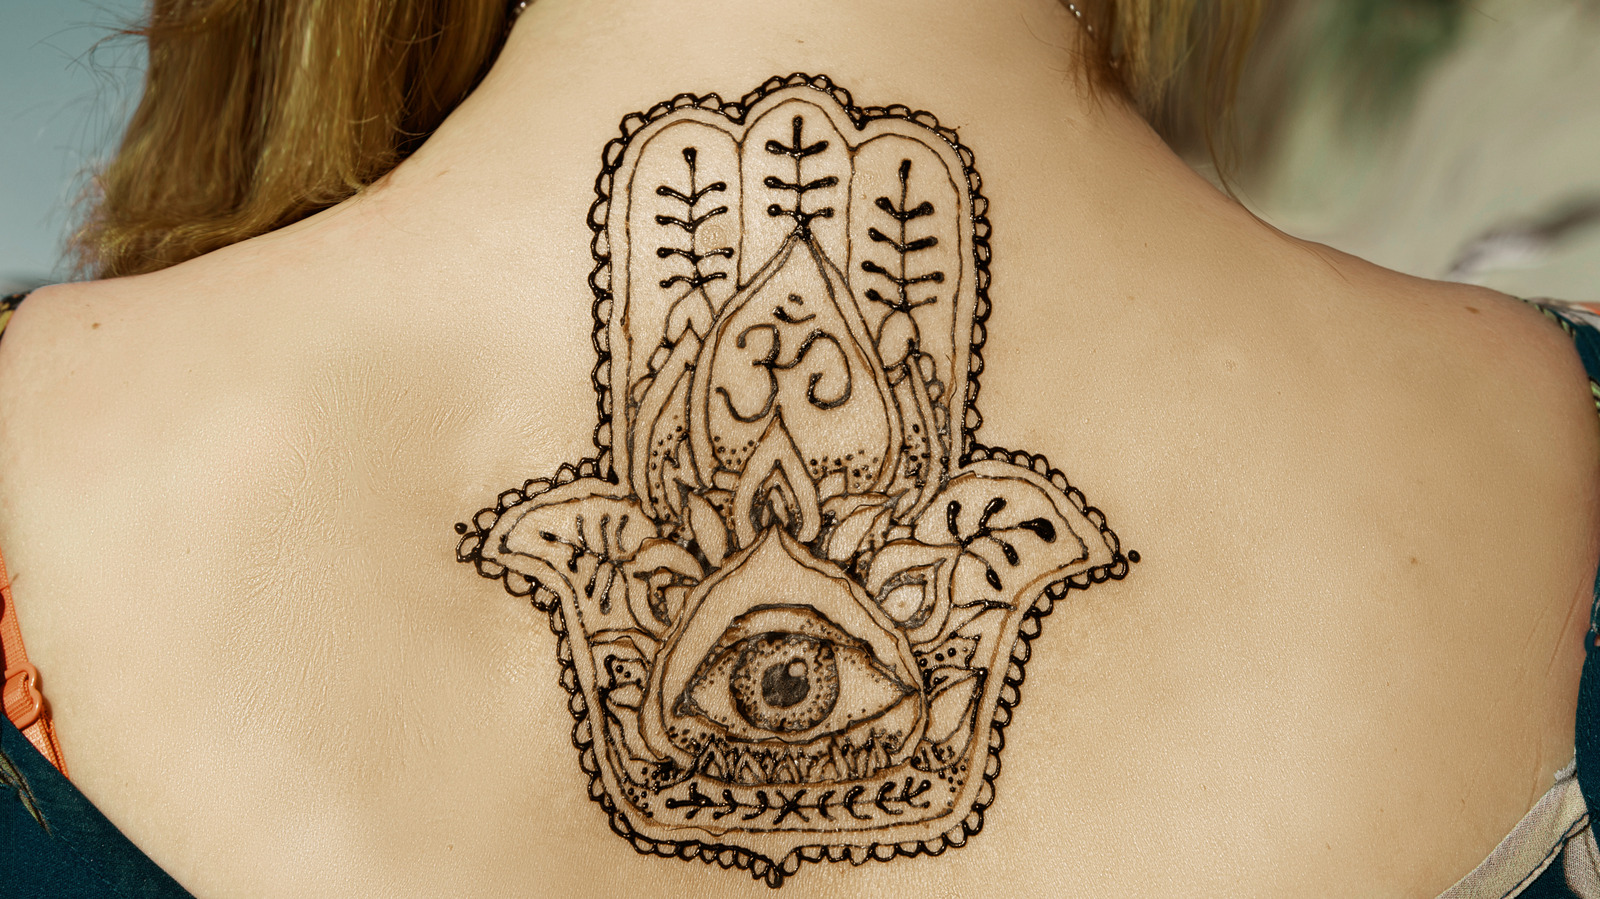 Back Tattoo Ideas  Back tattoos for girls  religious tattoos  Hamsa  tattoo ideas  YouTube